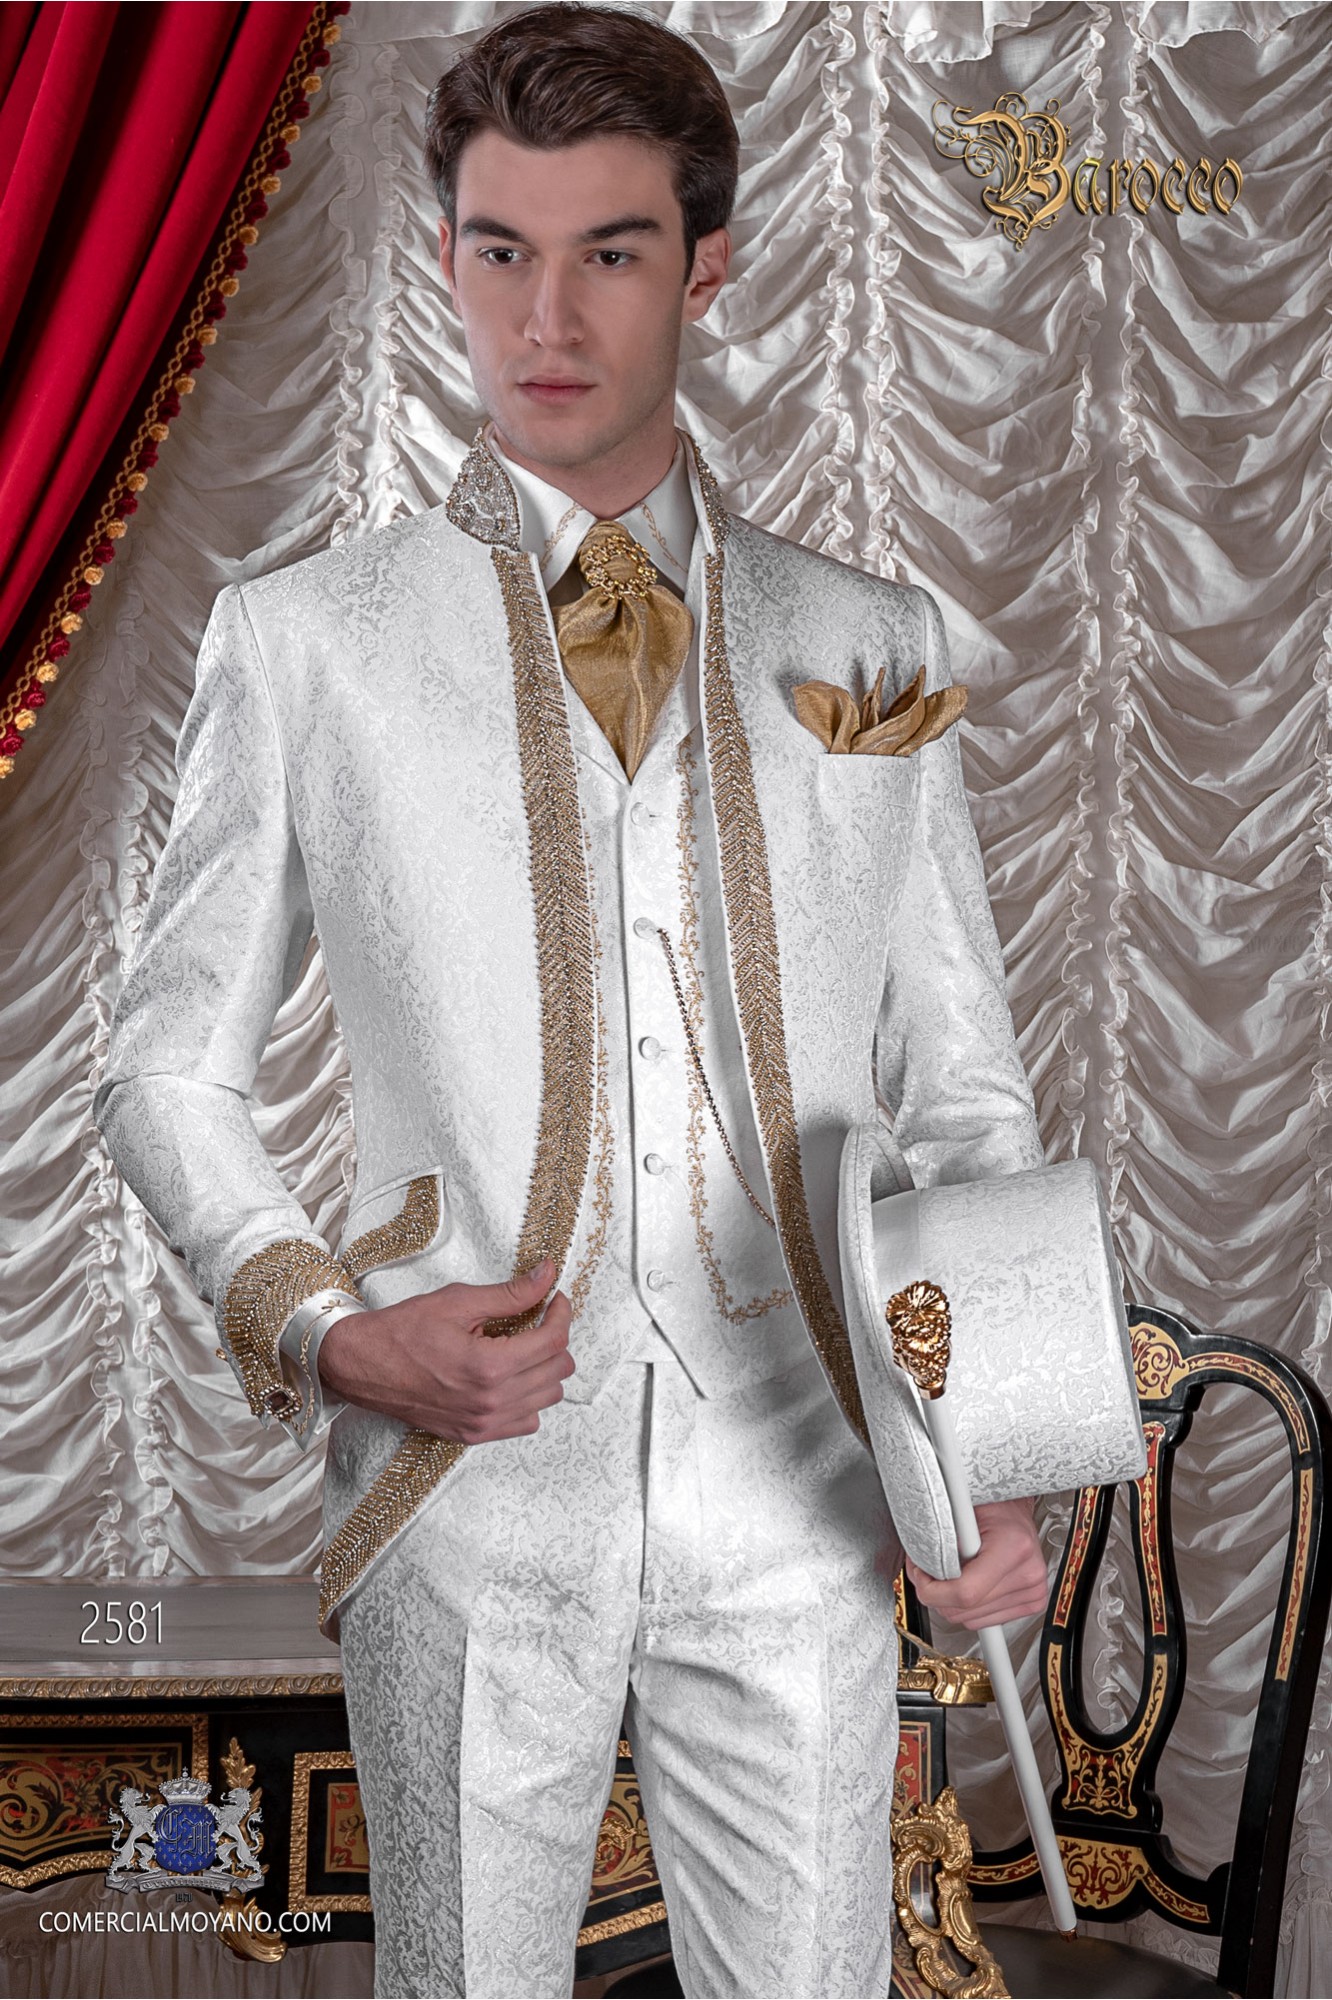 Baroque wedding suit, vintage frock coat in white floral brocade fabric, Mao collar with gold rhinestones model 2581 Mario Moyano